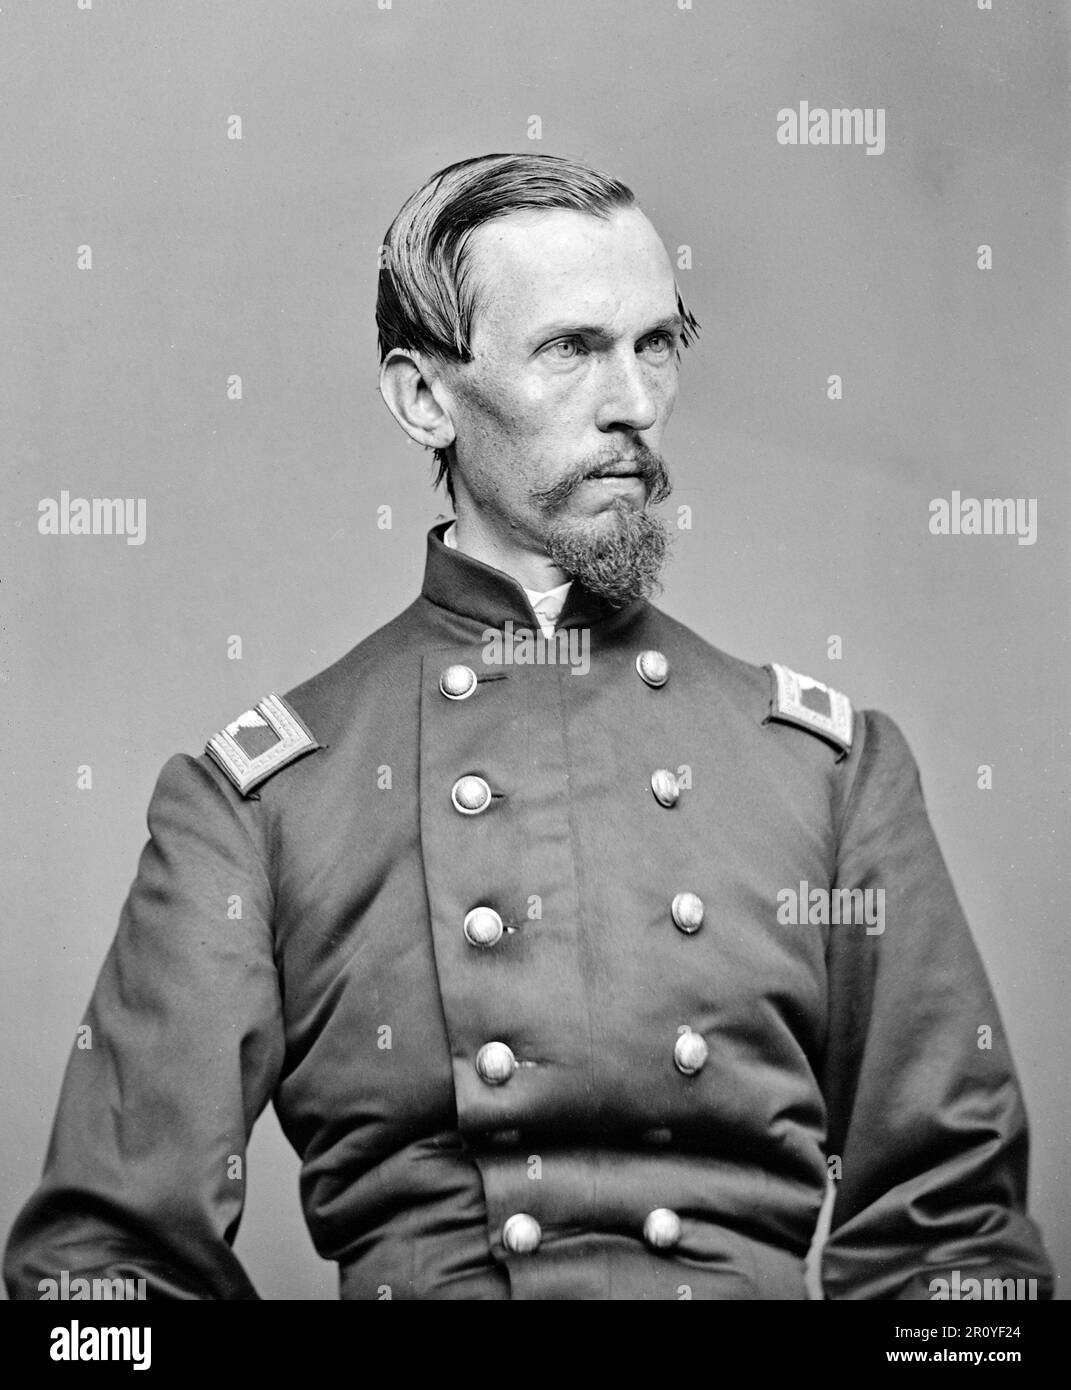 Michael Corcoran. Portrait of the Union Army General, Michael Corcoran (1827-1863) by Mathew Brady, c. 1860-63 Stock Photo